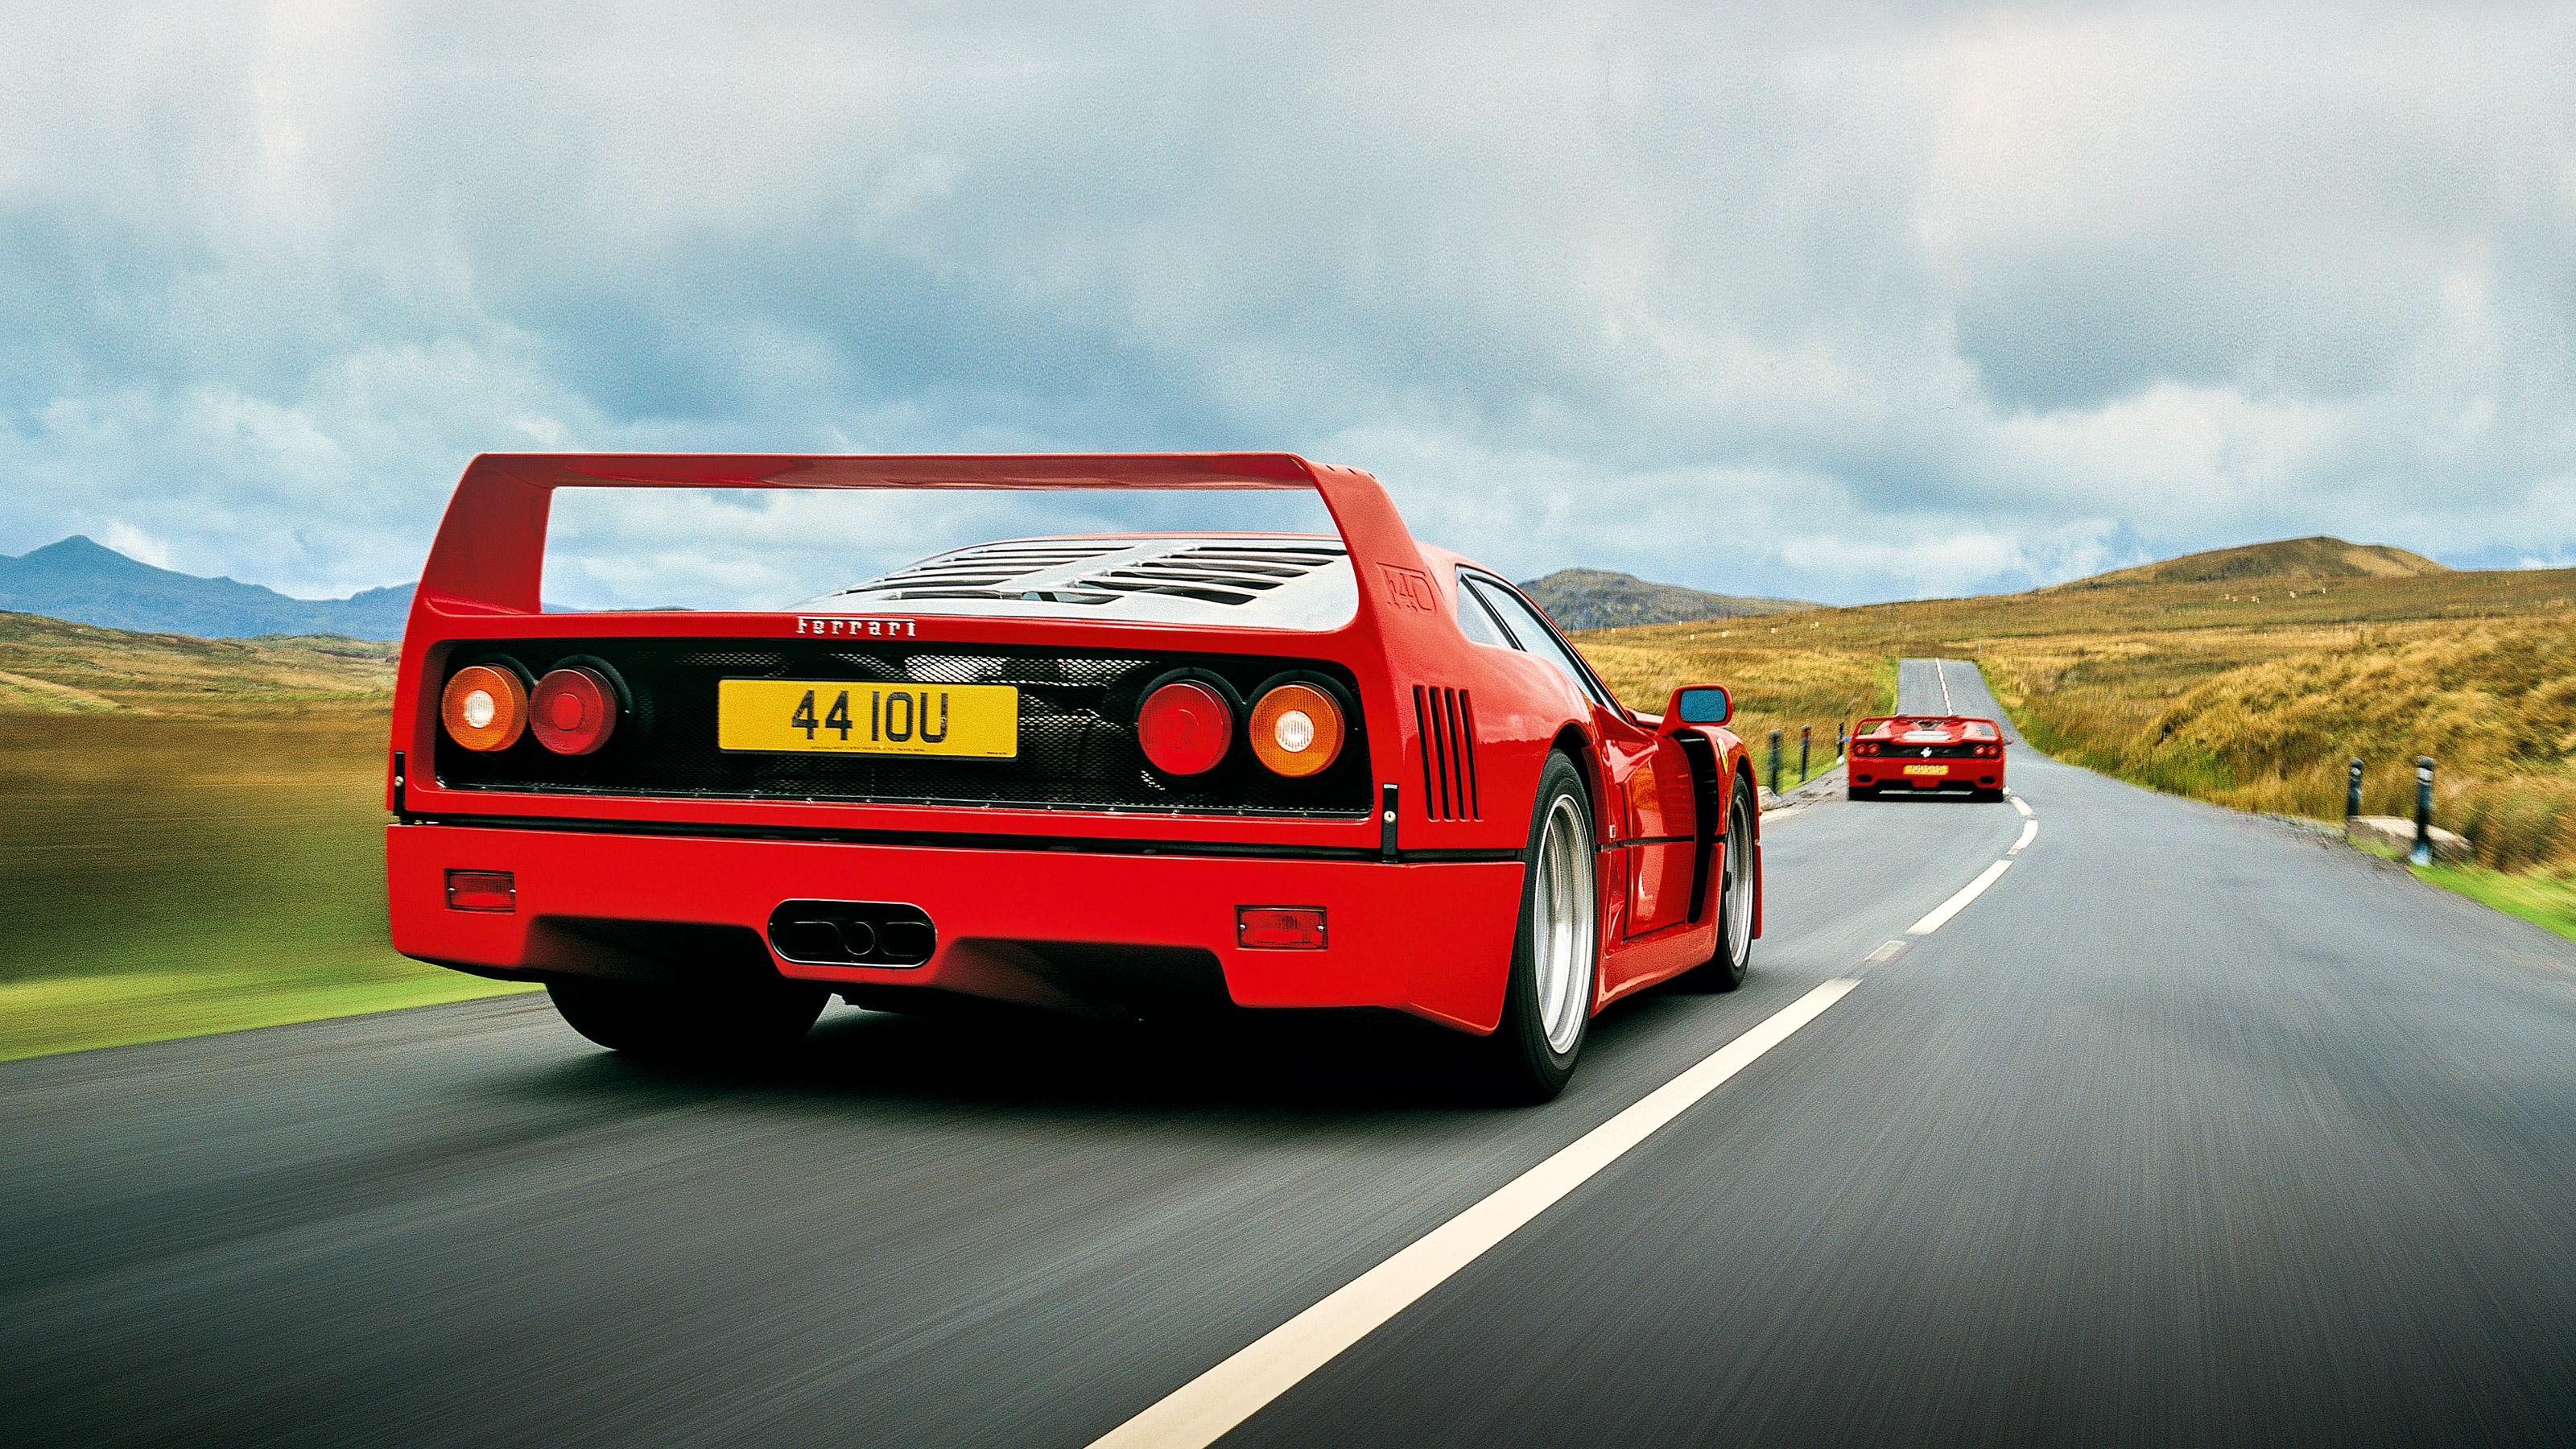 Ferrari's hypercars: 288 GTO, F40, F50 and Enzo driven back-to